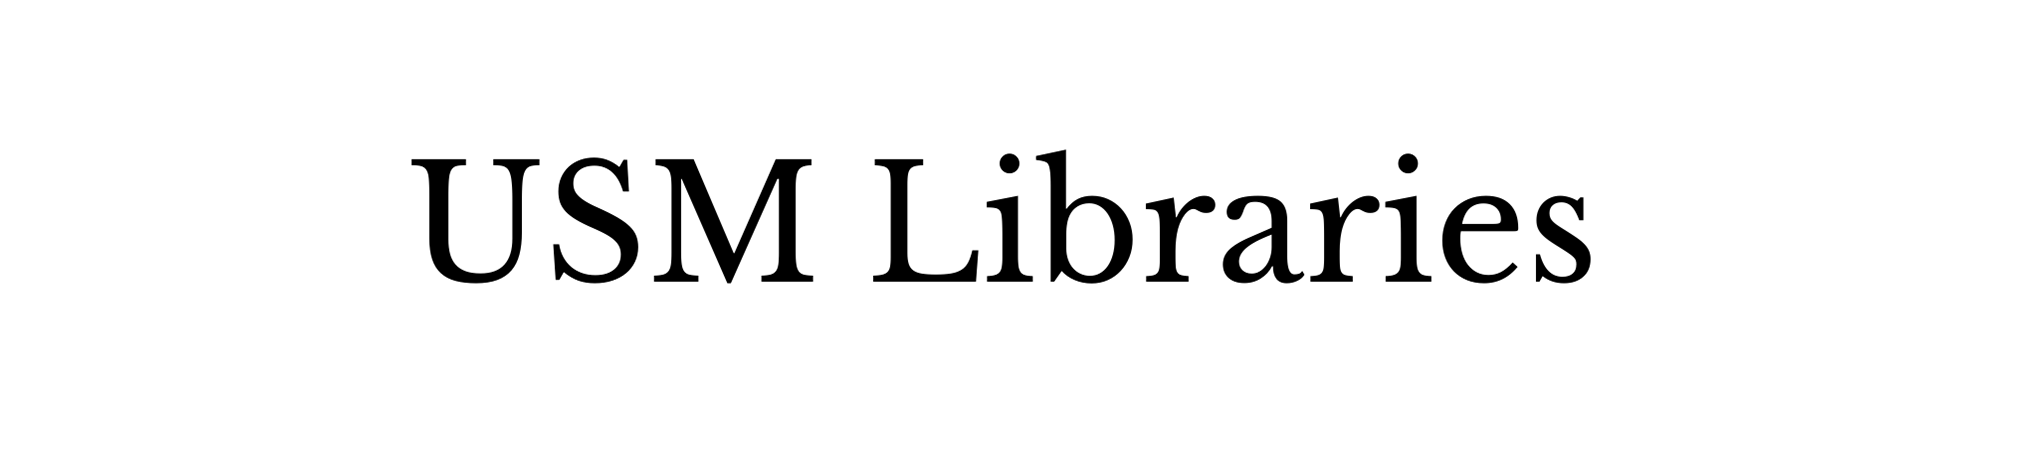 USM Libraries